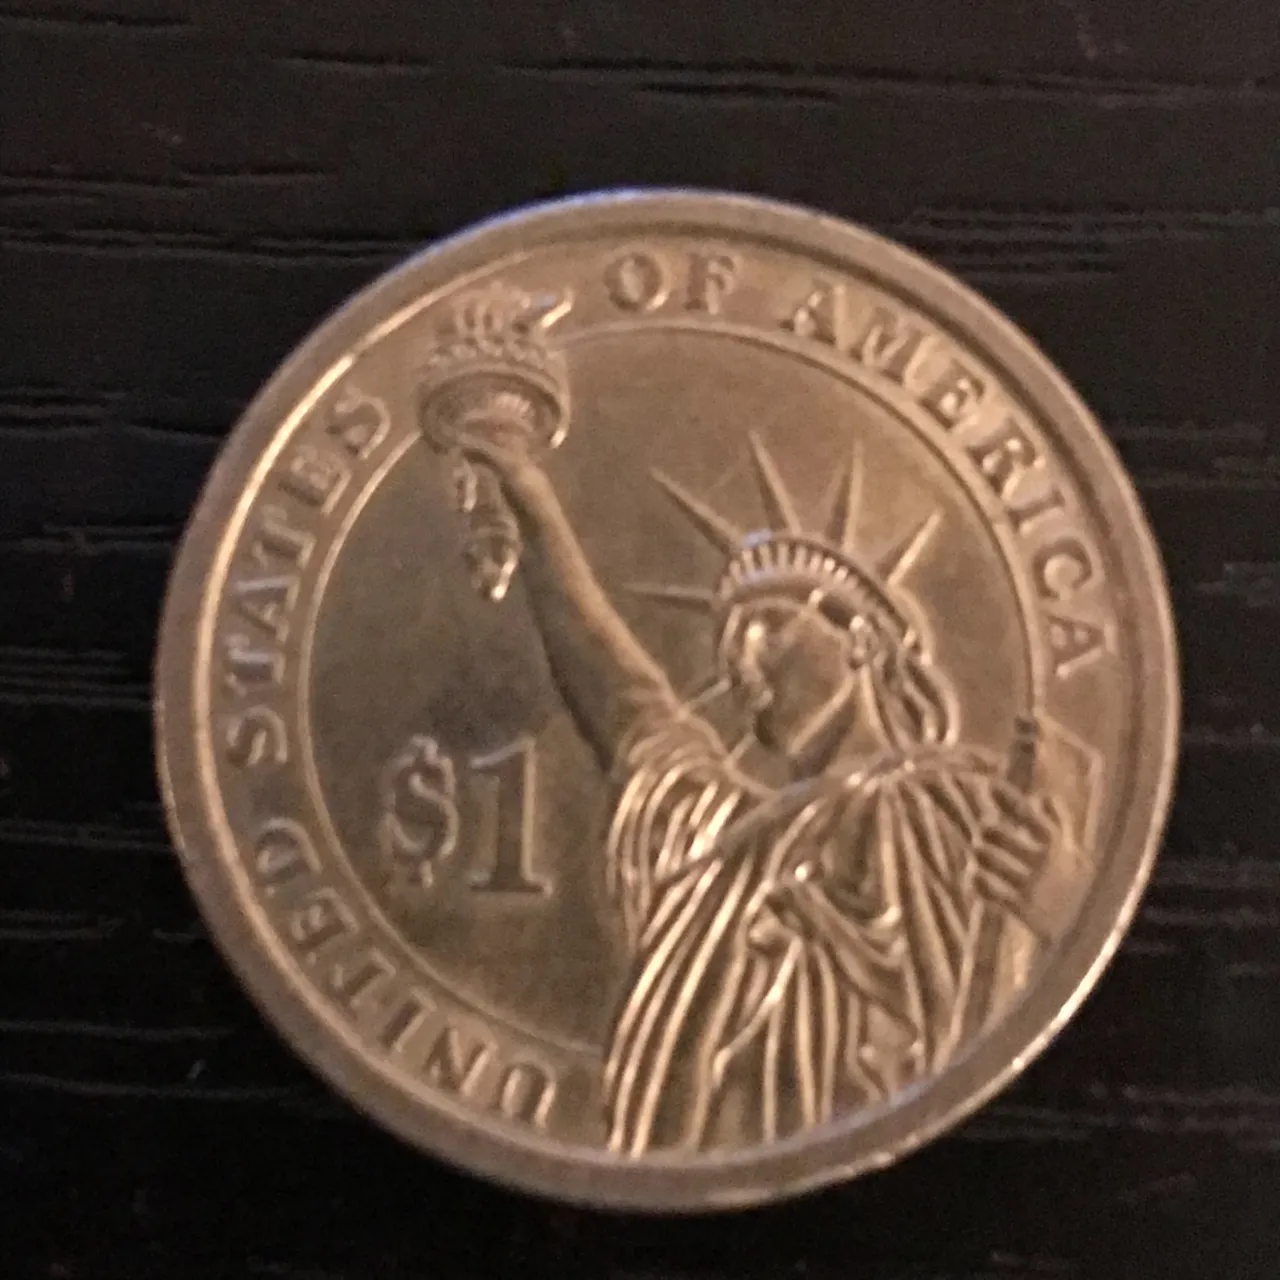 Andrew Jackson Presidential $1 USD Coin photo 3